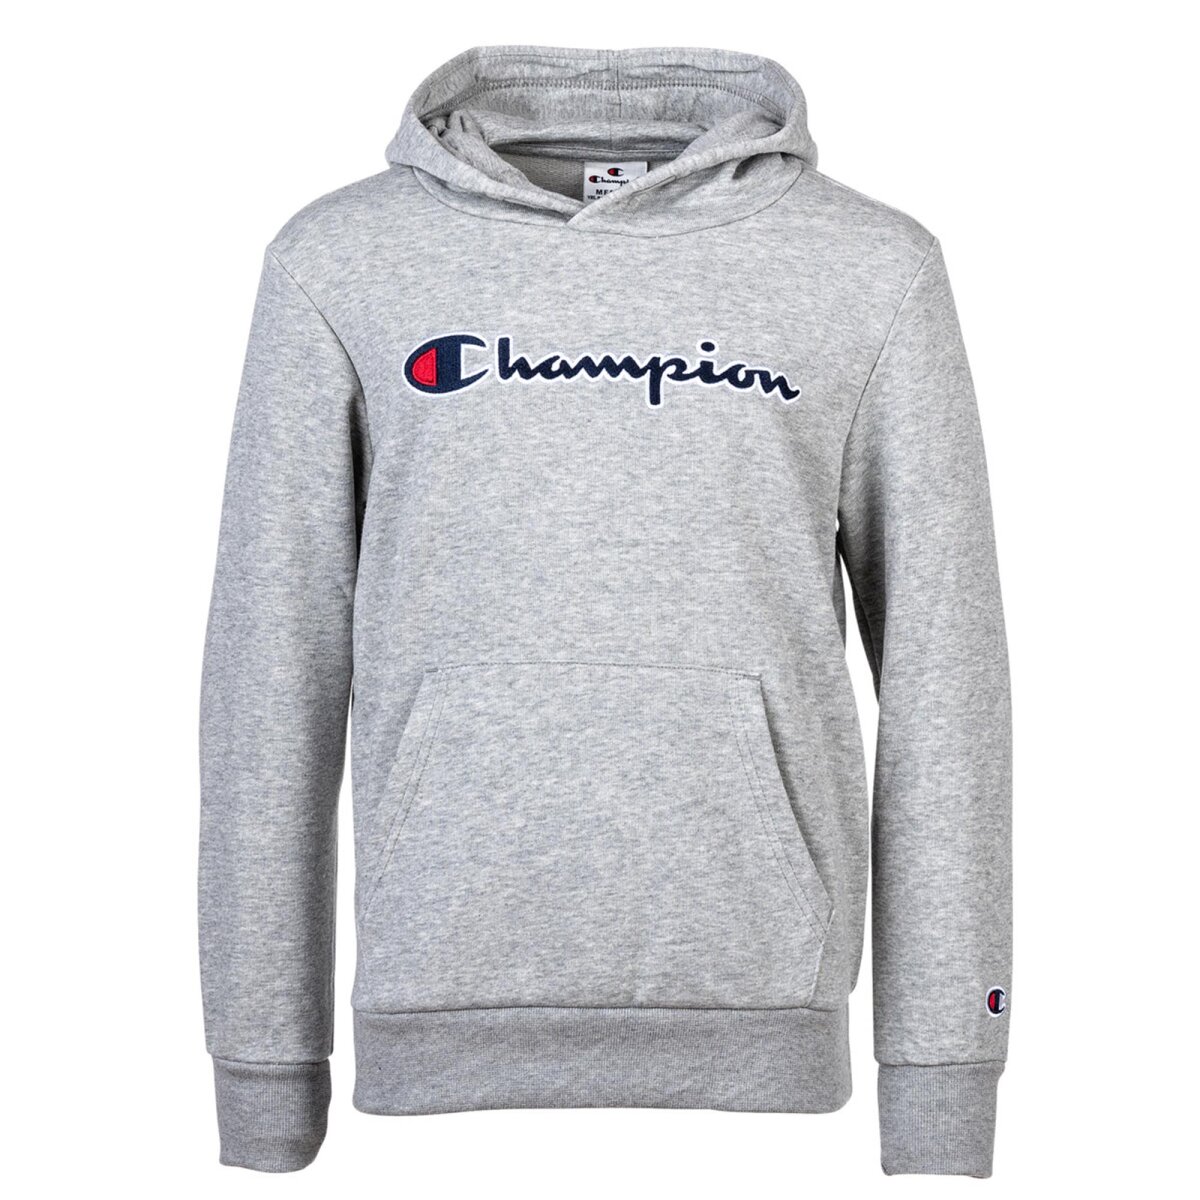 Champion Kids Unisex Hoodie - Sweater, Cotton, Hood, Pocket, Logo, So,  47,95 €